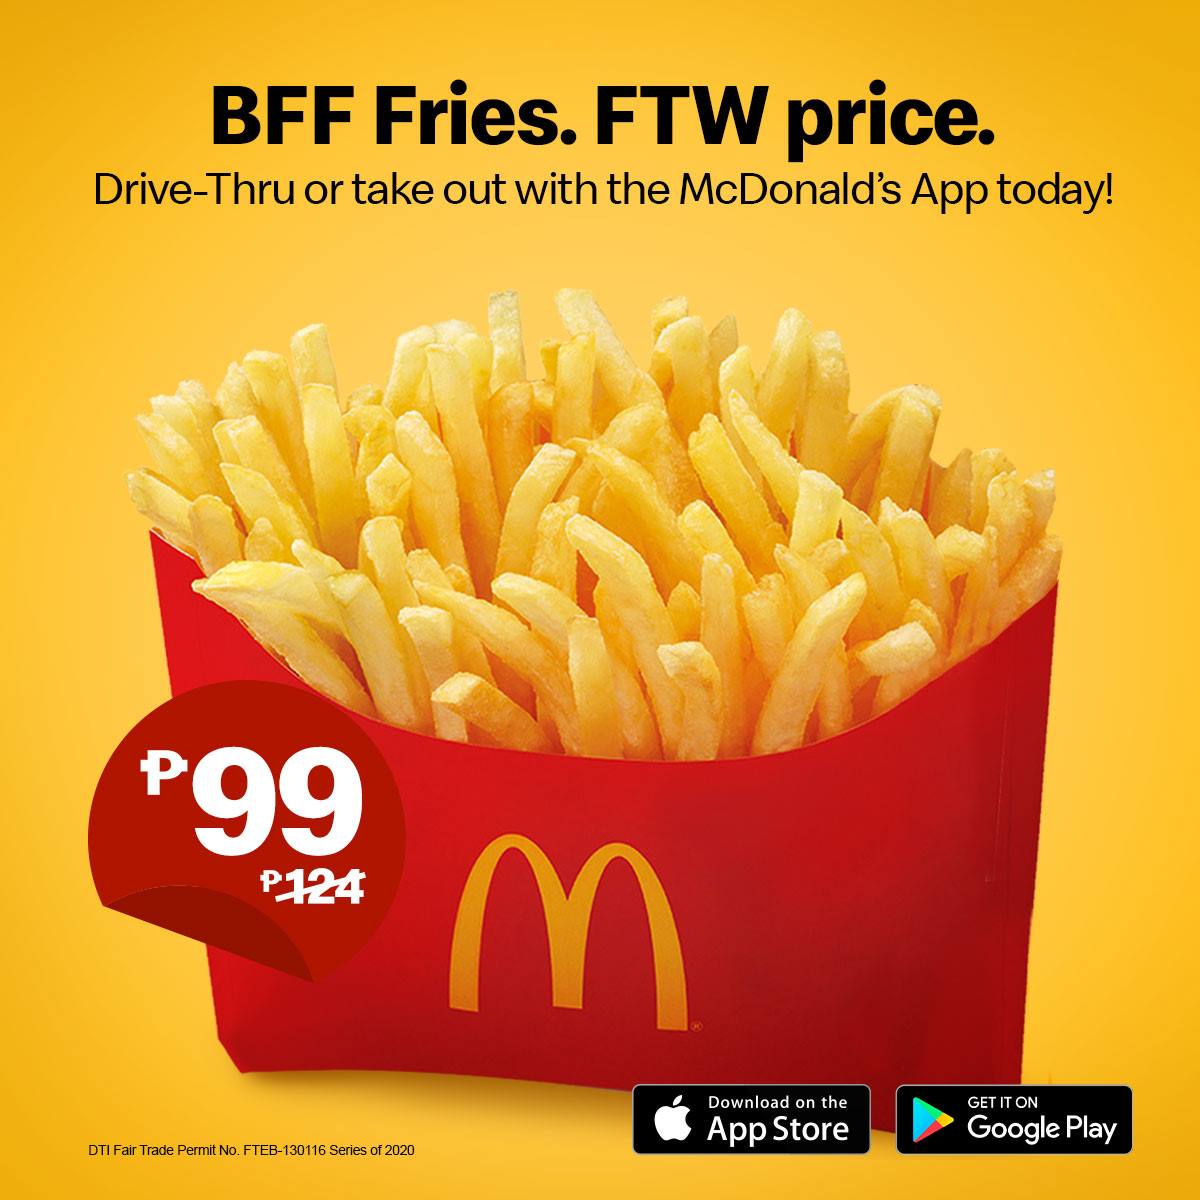 McDo BFF Fries P99 1 